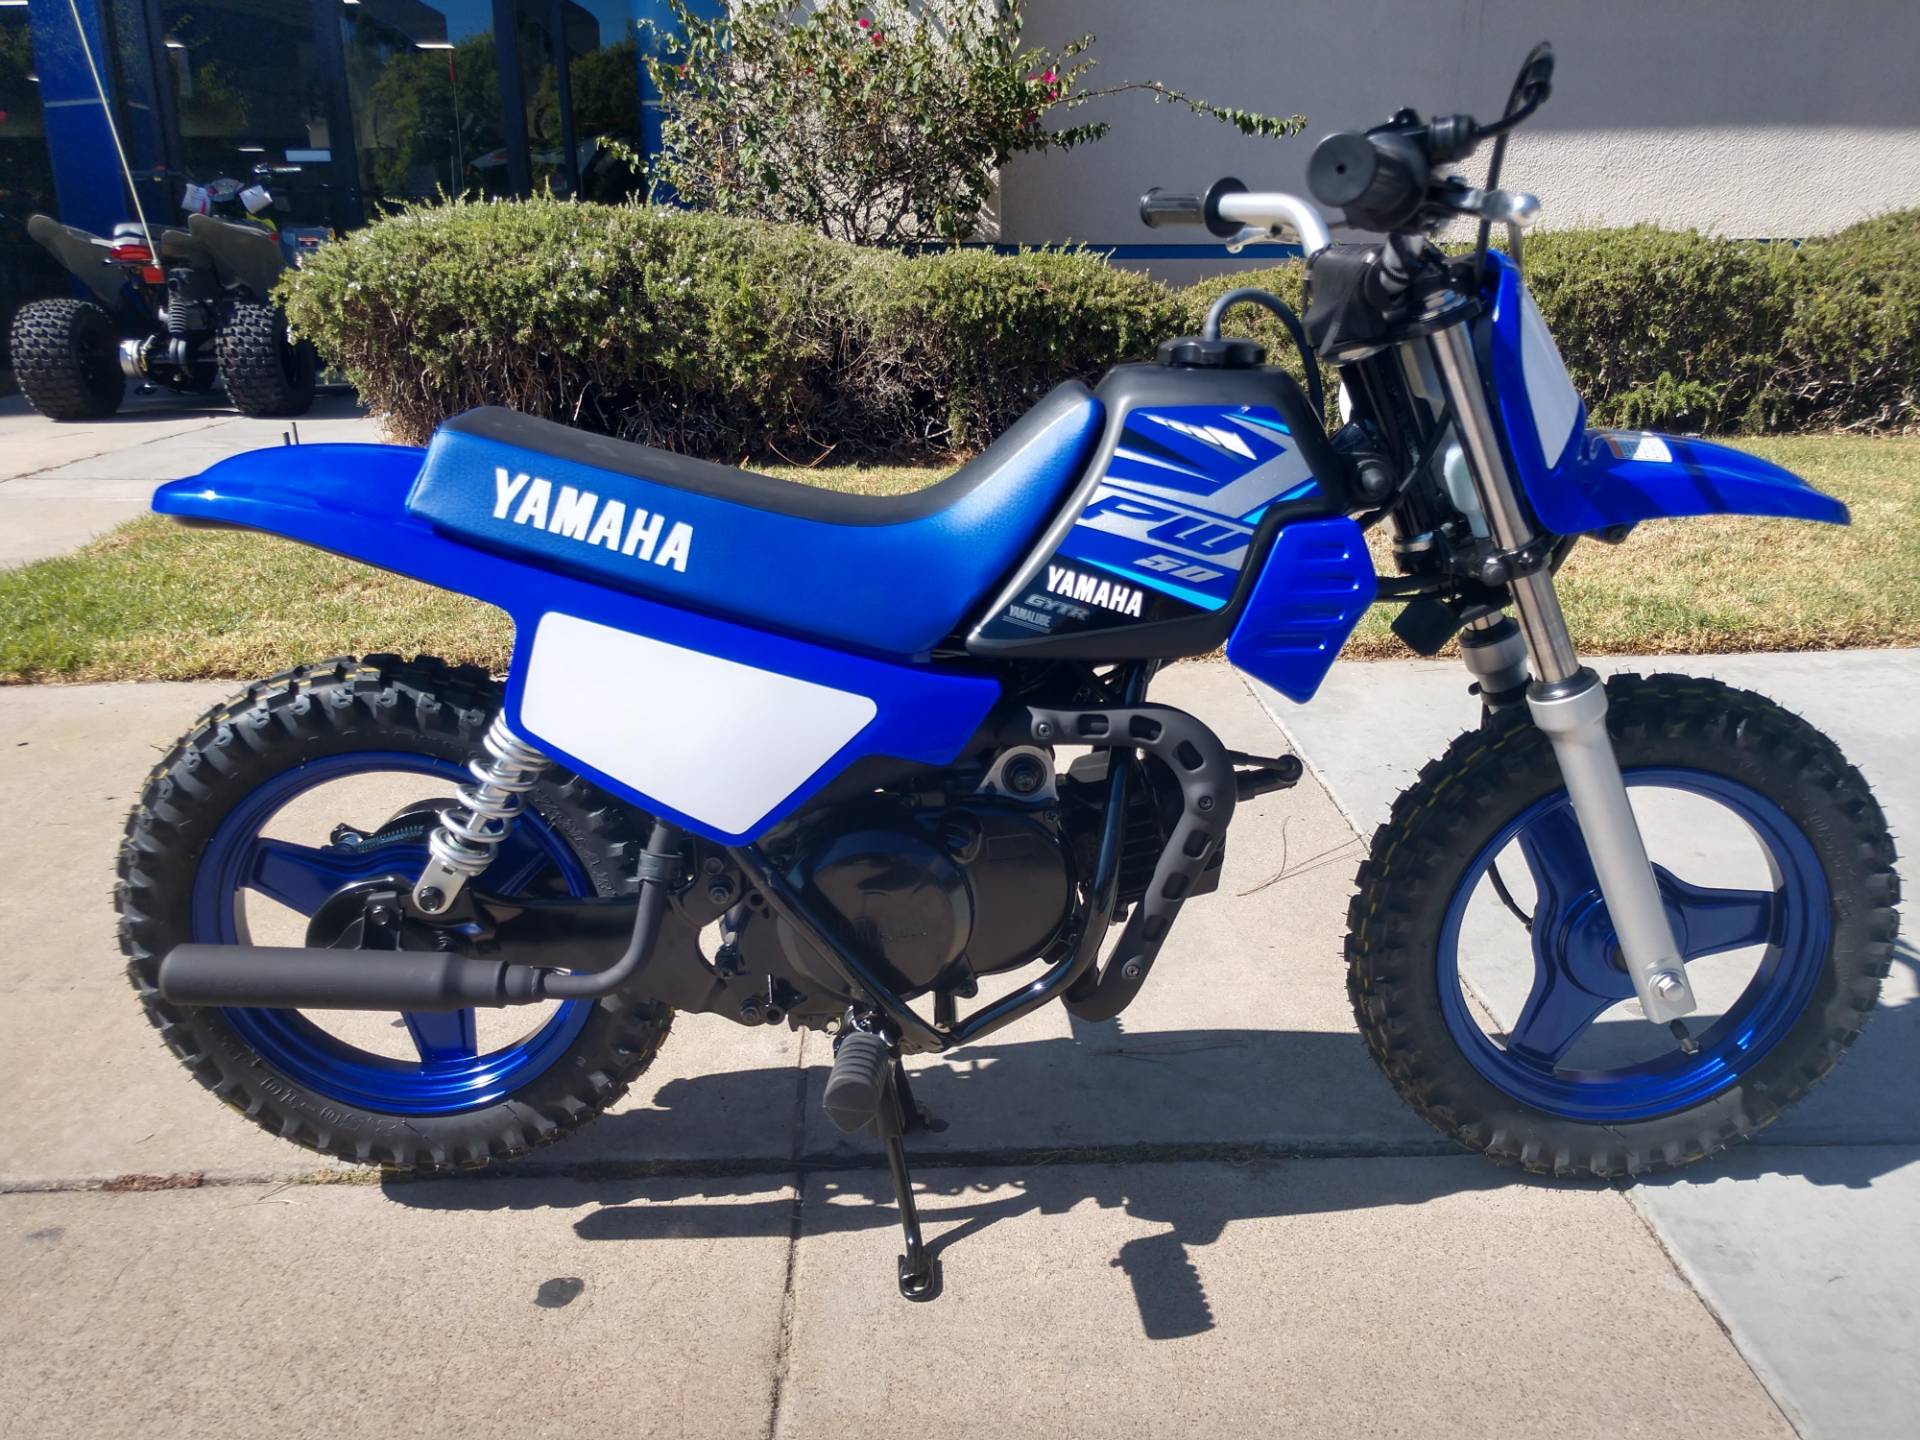 New 2020 Yamaha Pw50 Motorcycles In El Cajon Ca N A Team Yamaha Blue